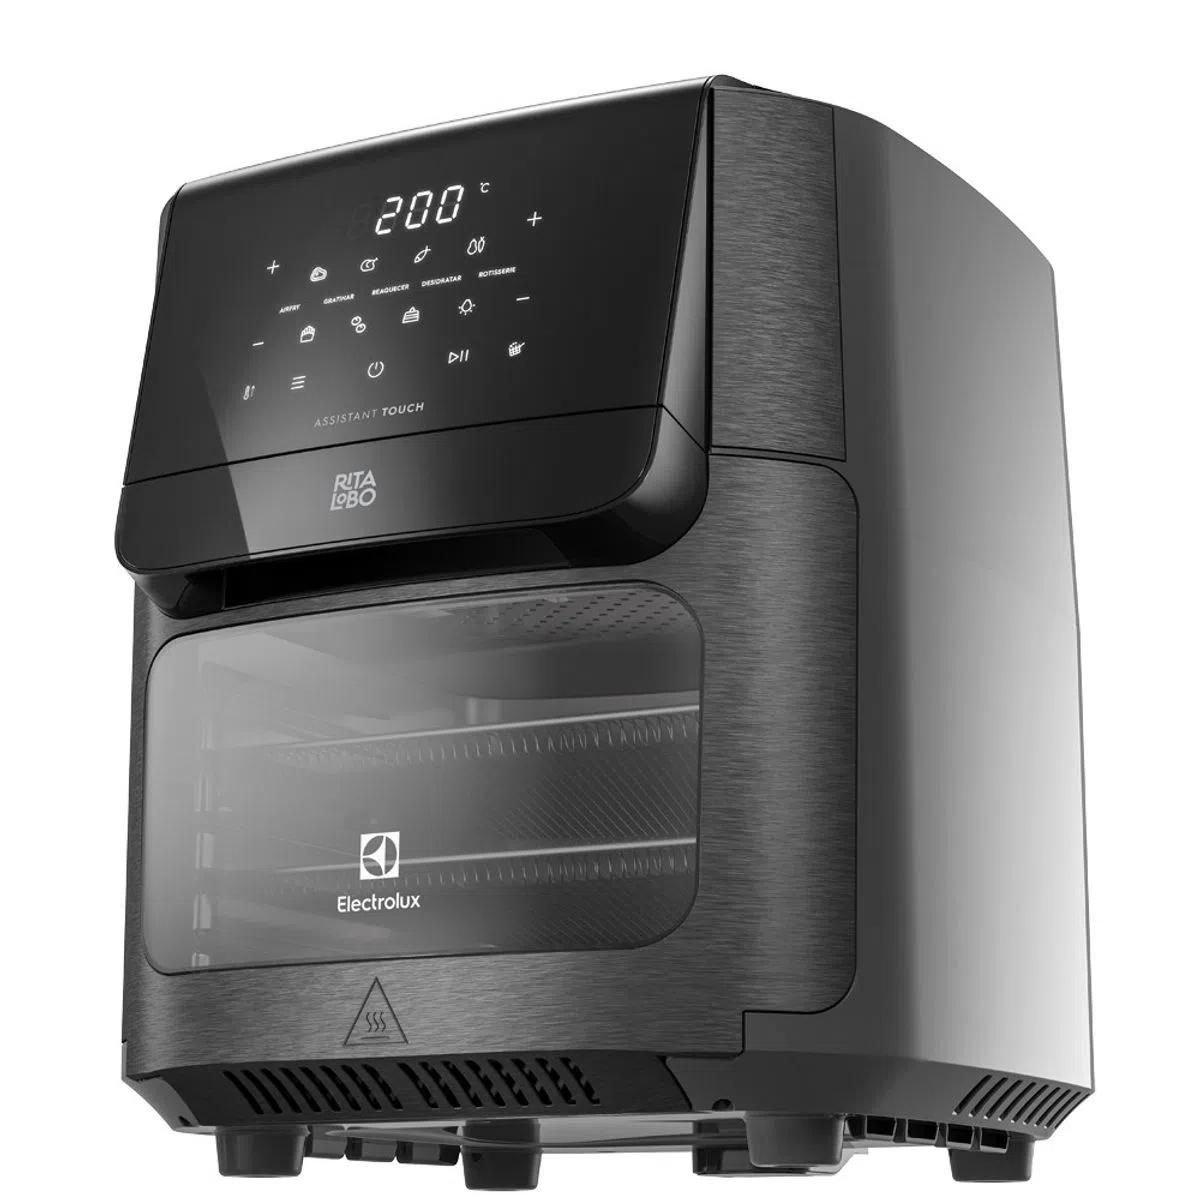 Fritadeira Elétrica sem Óleo Forno Oven Air Fryer Electrolux Eaf90 Experience 220v Digital 12l Capac - 2